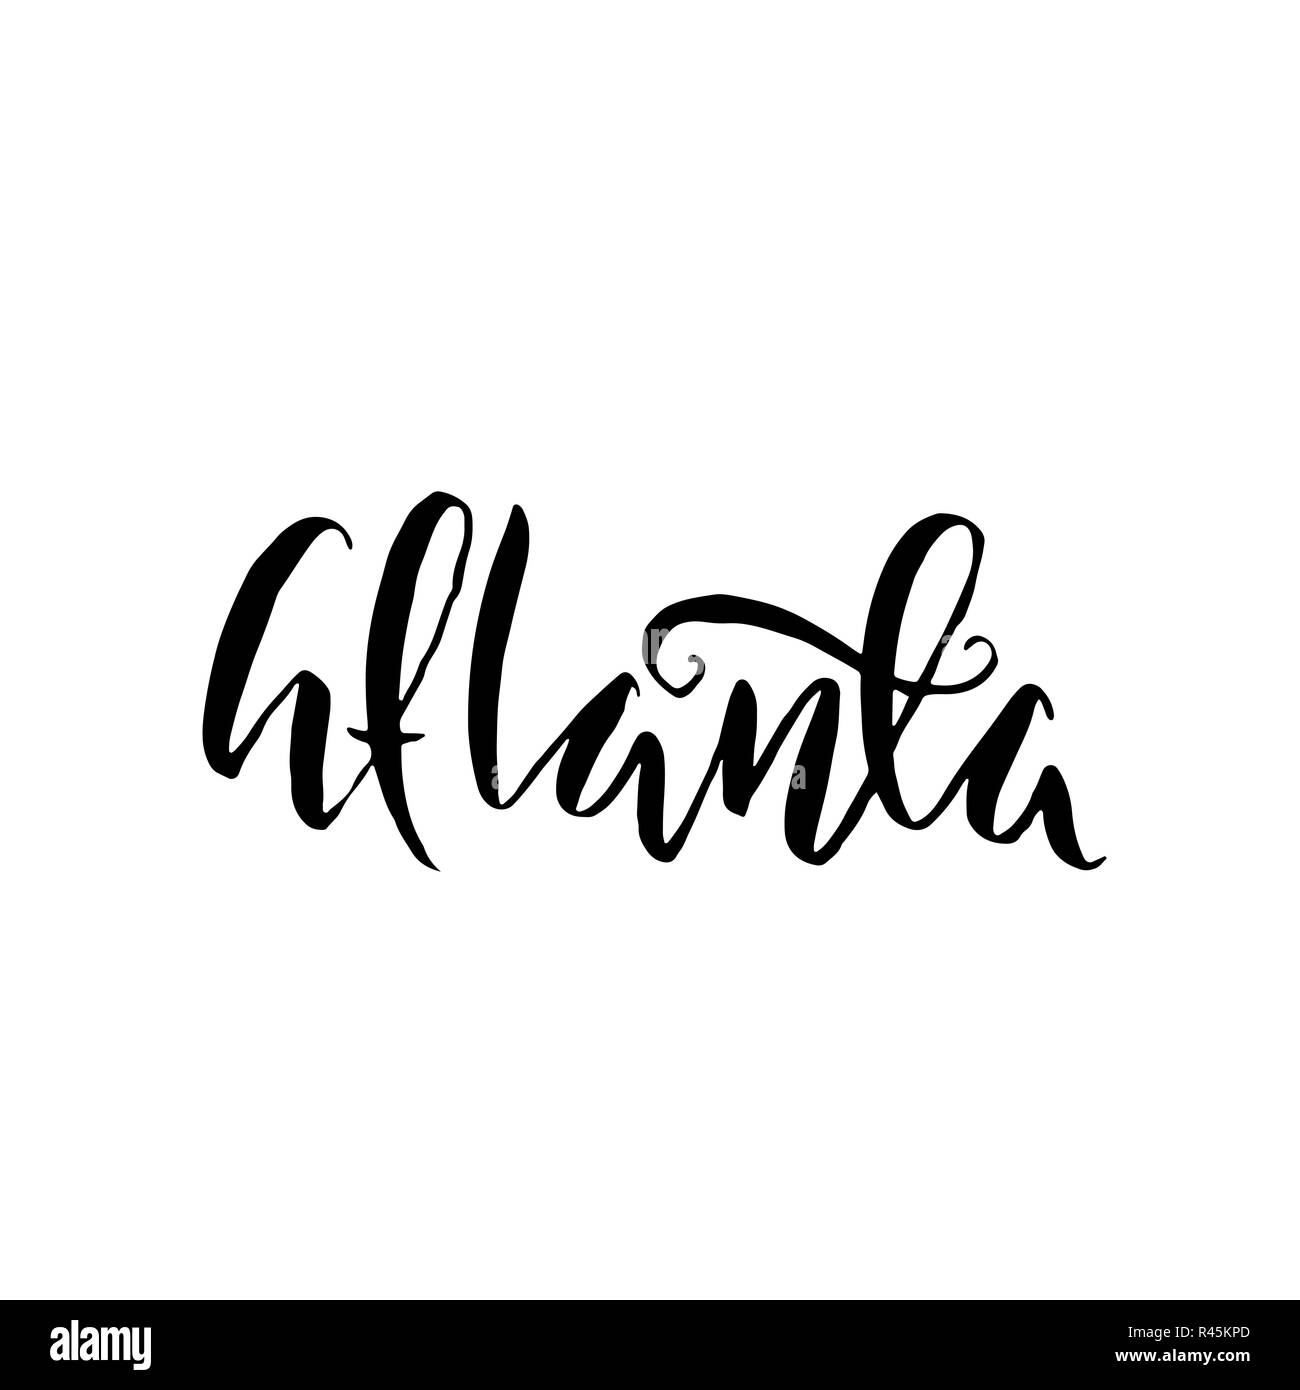 Atlanta, USA. Typography dry brush lettering design. Hand drawn calligraphy poster. Vector illustration. Stock Vector